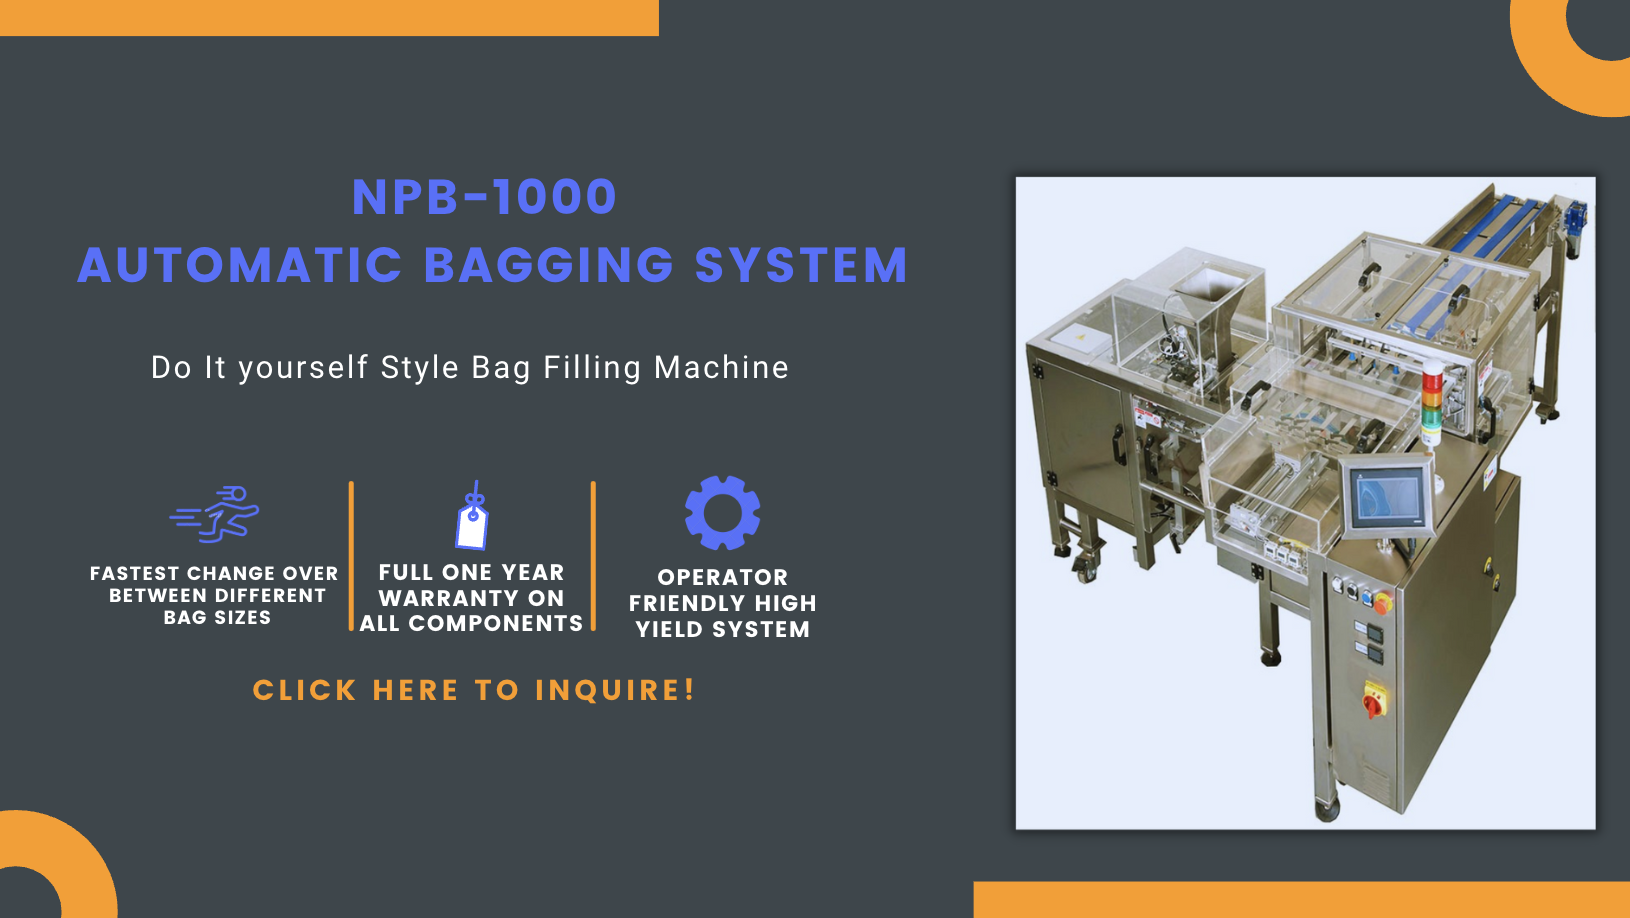 NPB-1000 Automatic Bagging System